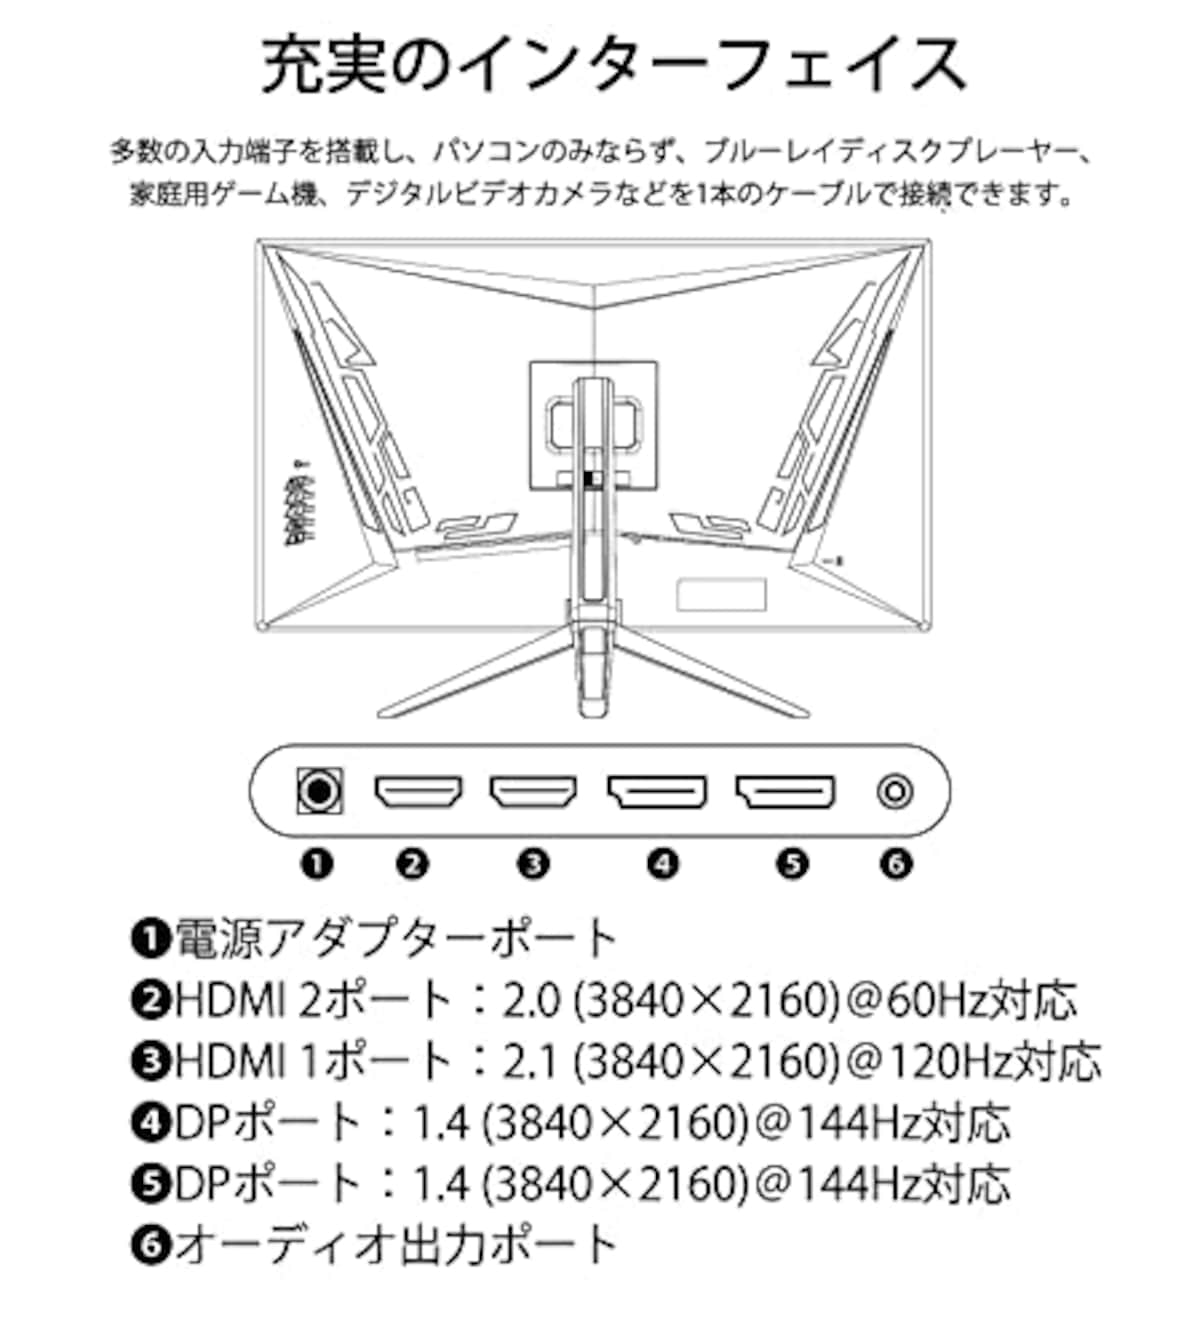  【Amazon.co.jp限定】JAPANNEXT 28インチゲーミングモニター JN-280IPS144UHDR HDMI2.1対応 4K(3840 x 2160) 144Hz 液晶モニター HDMI DP画像5 